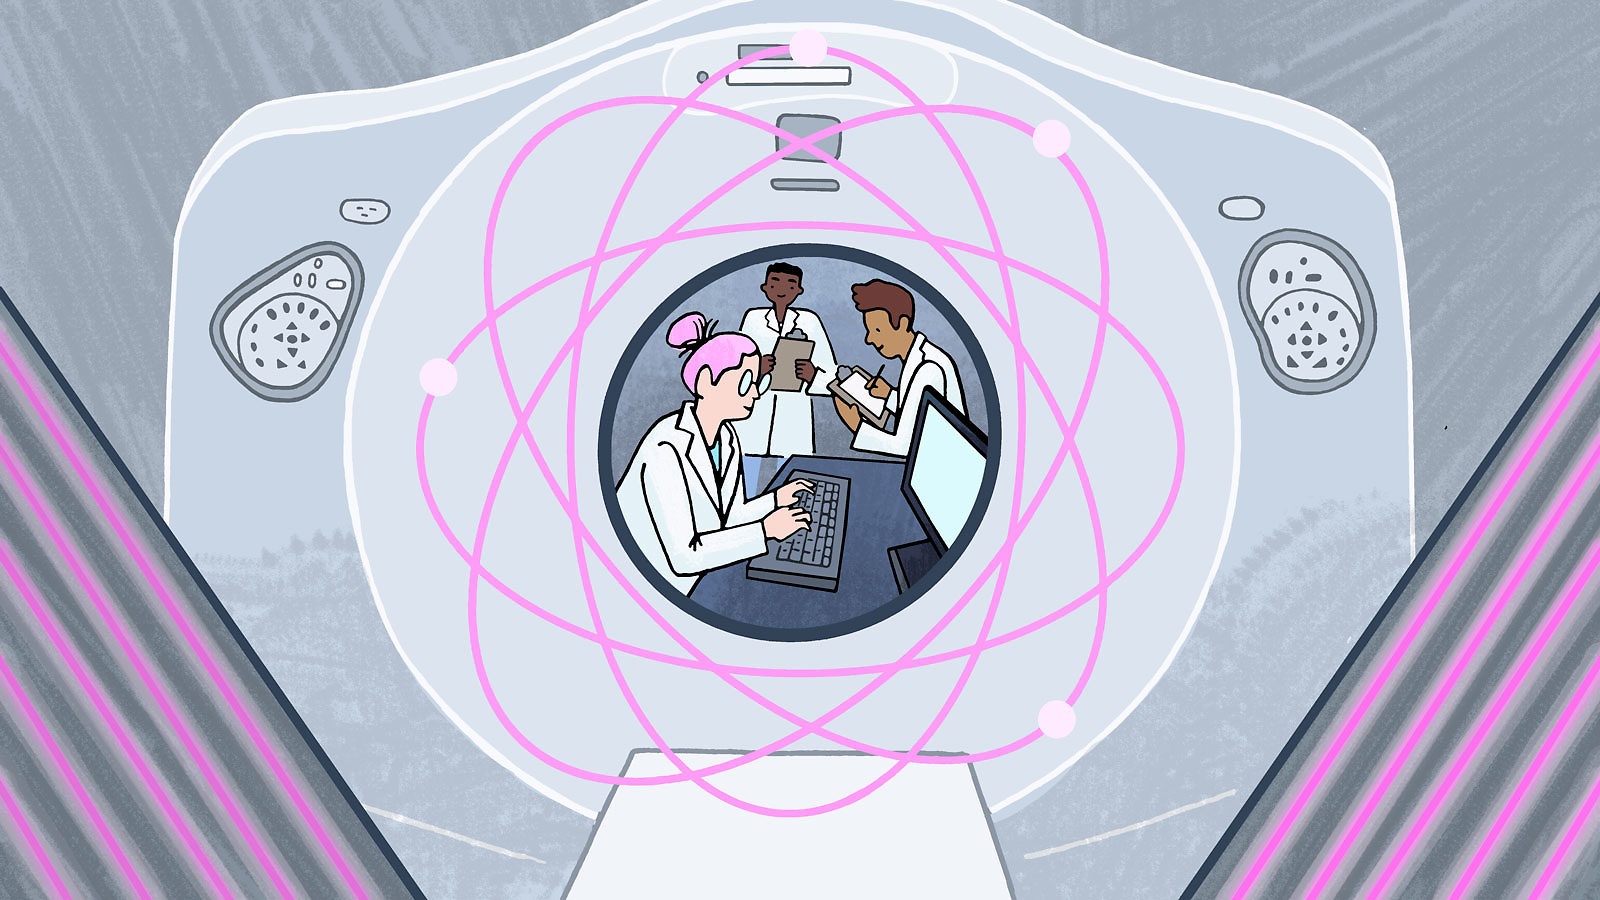 Medical scientists shown working through an MRI